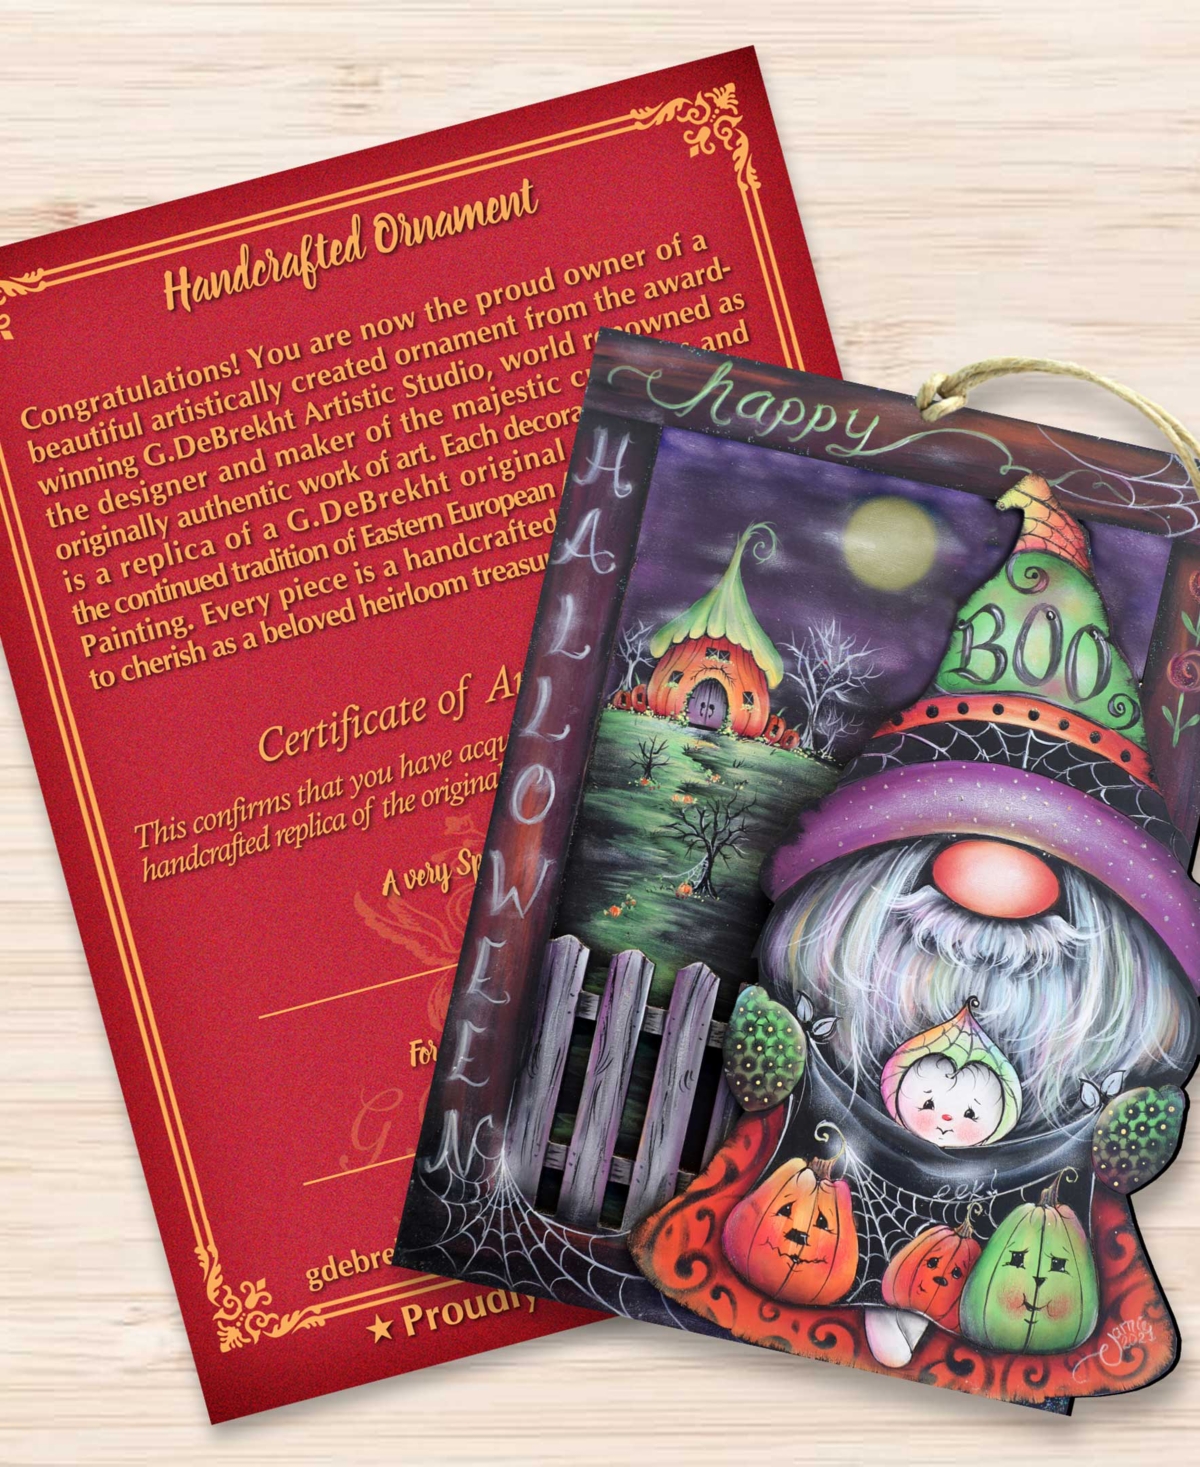 Shop Designocracy Holiday Wooden Ornaments Boo Halloween Gnome Home Decor J. Mills-price In Multi Color